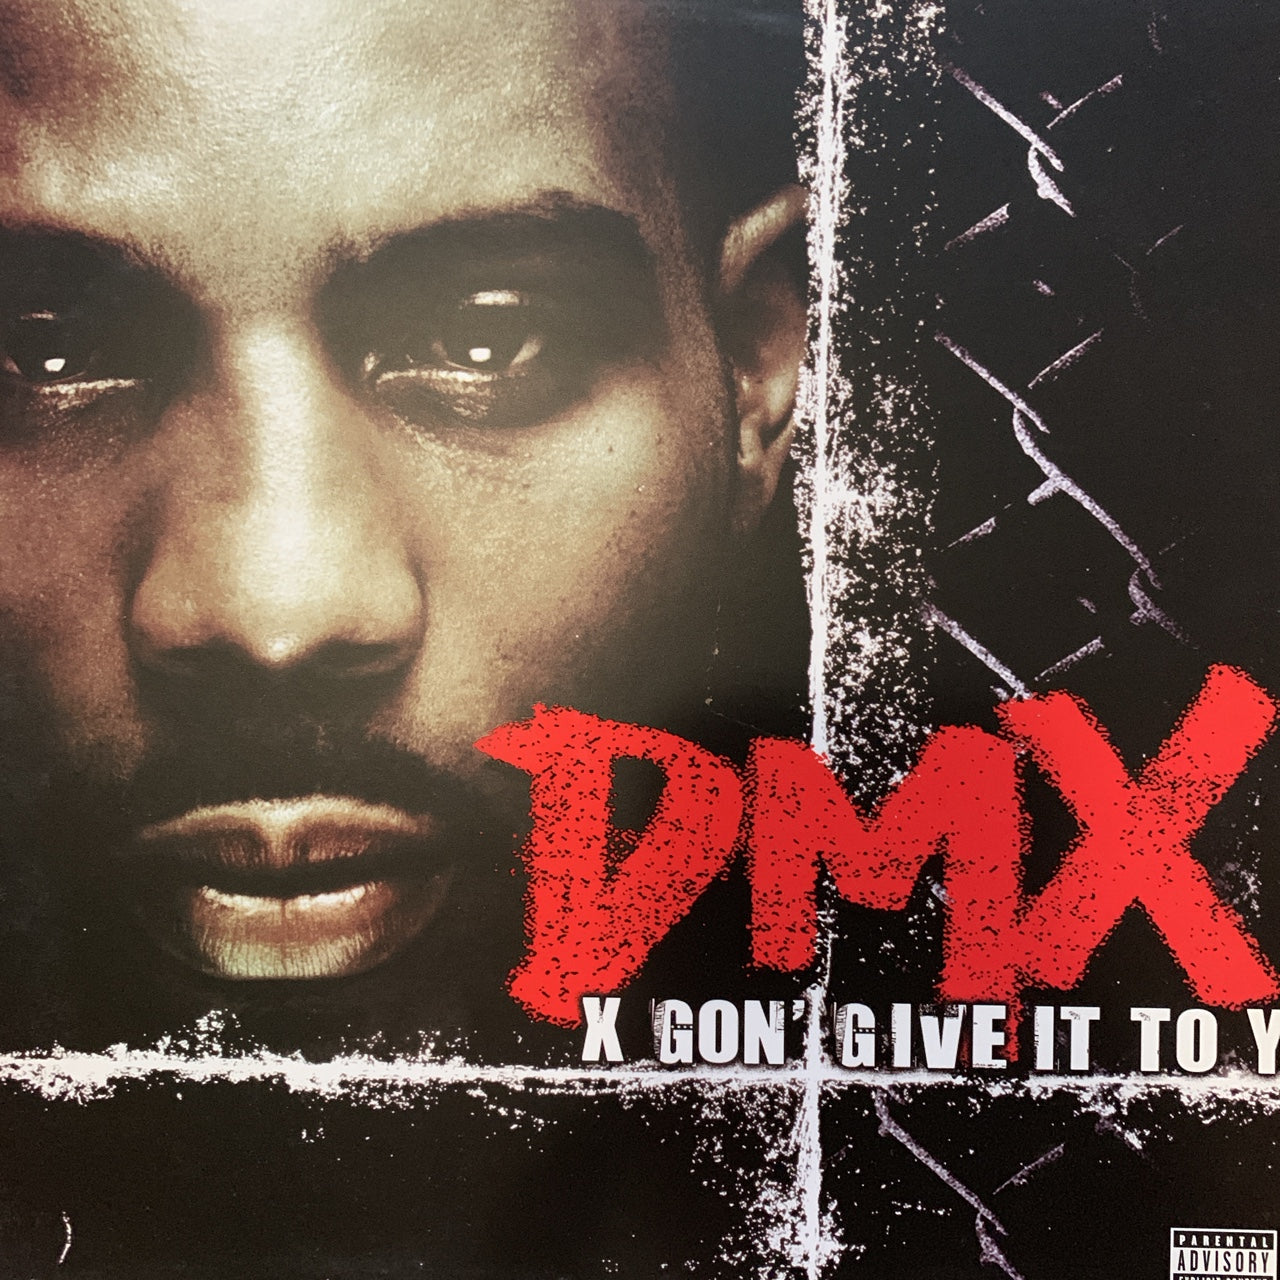 DMX "X GON’ GIVE IT TO YA" 12 inch Vinyl